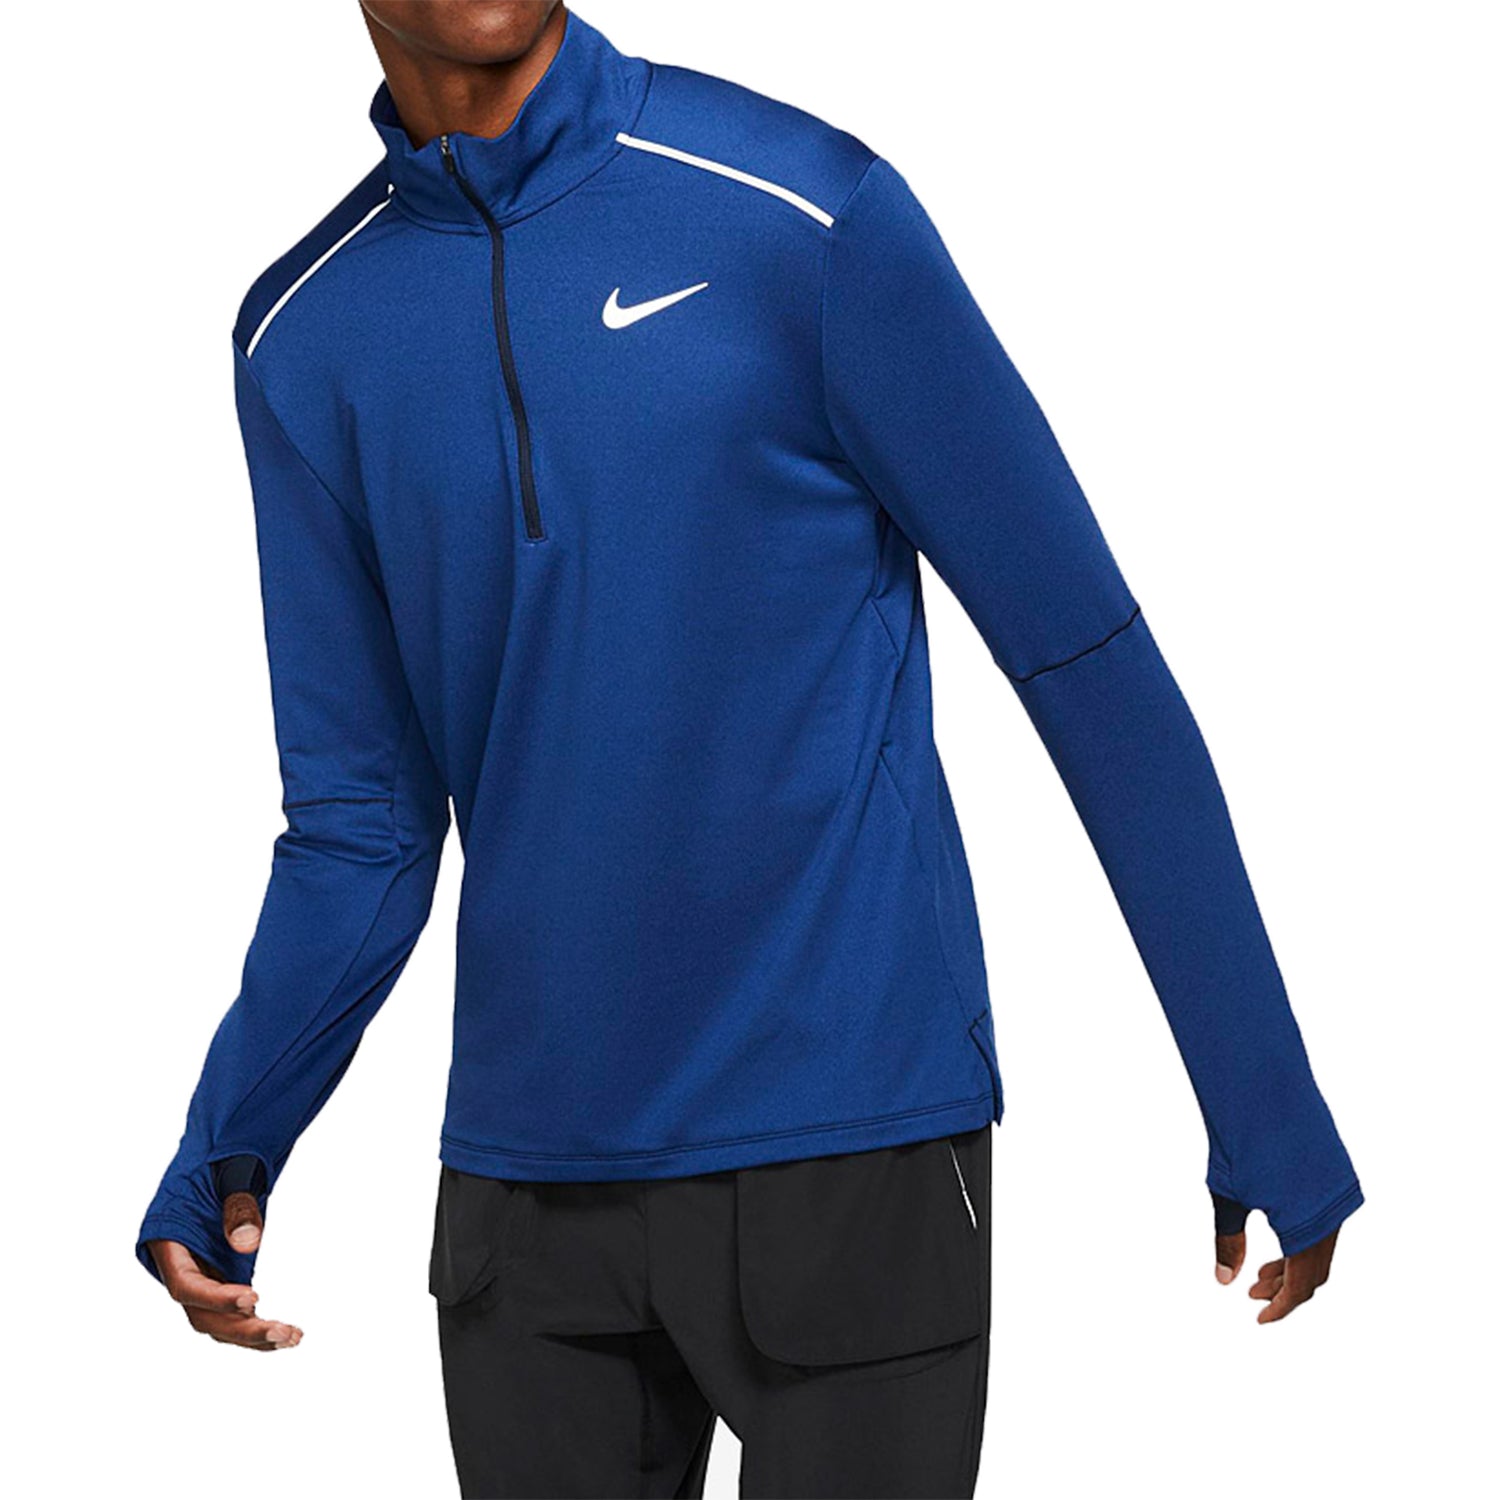 Nike Element 3.0 1/2 Zip Running Top Mens Style : Bv4721